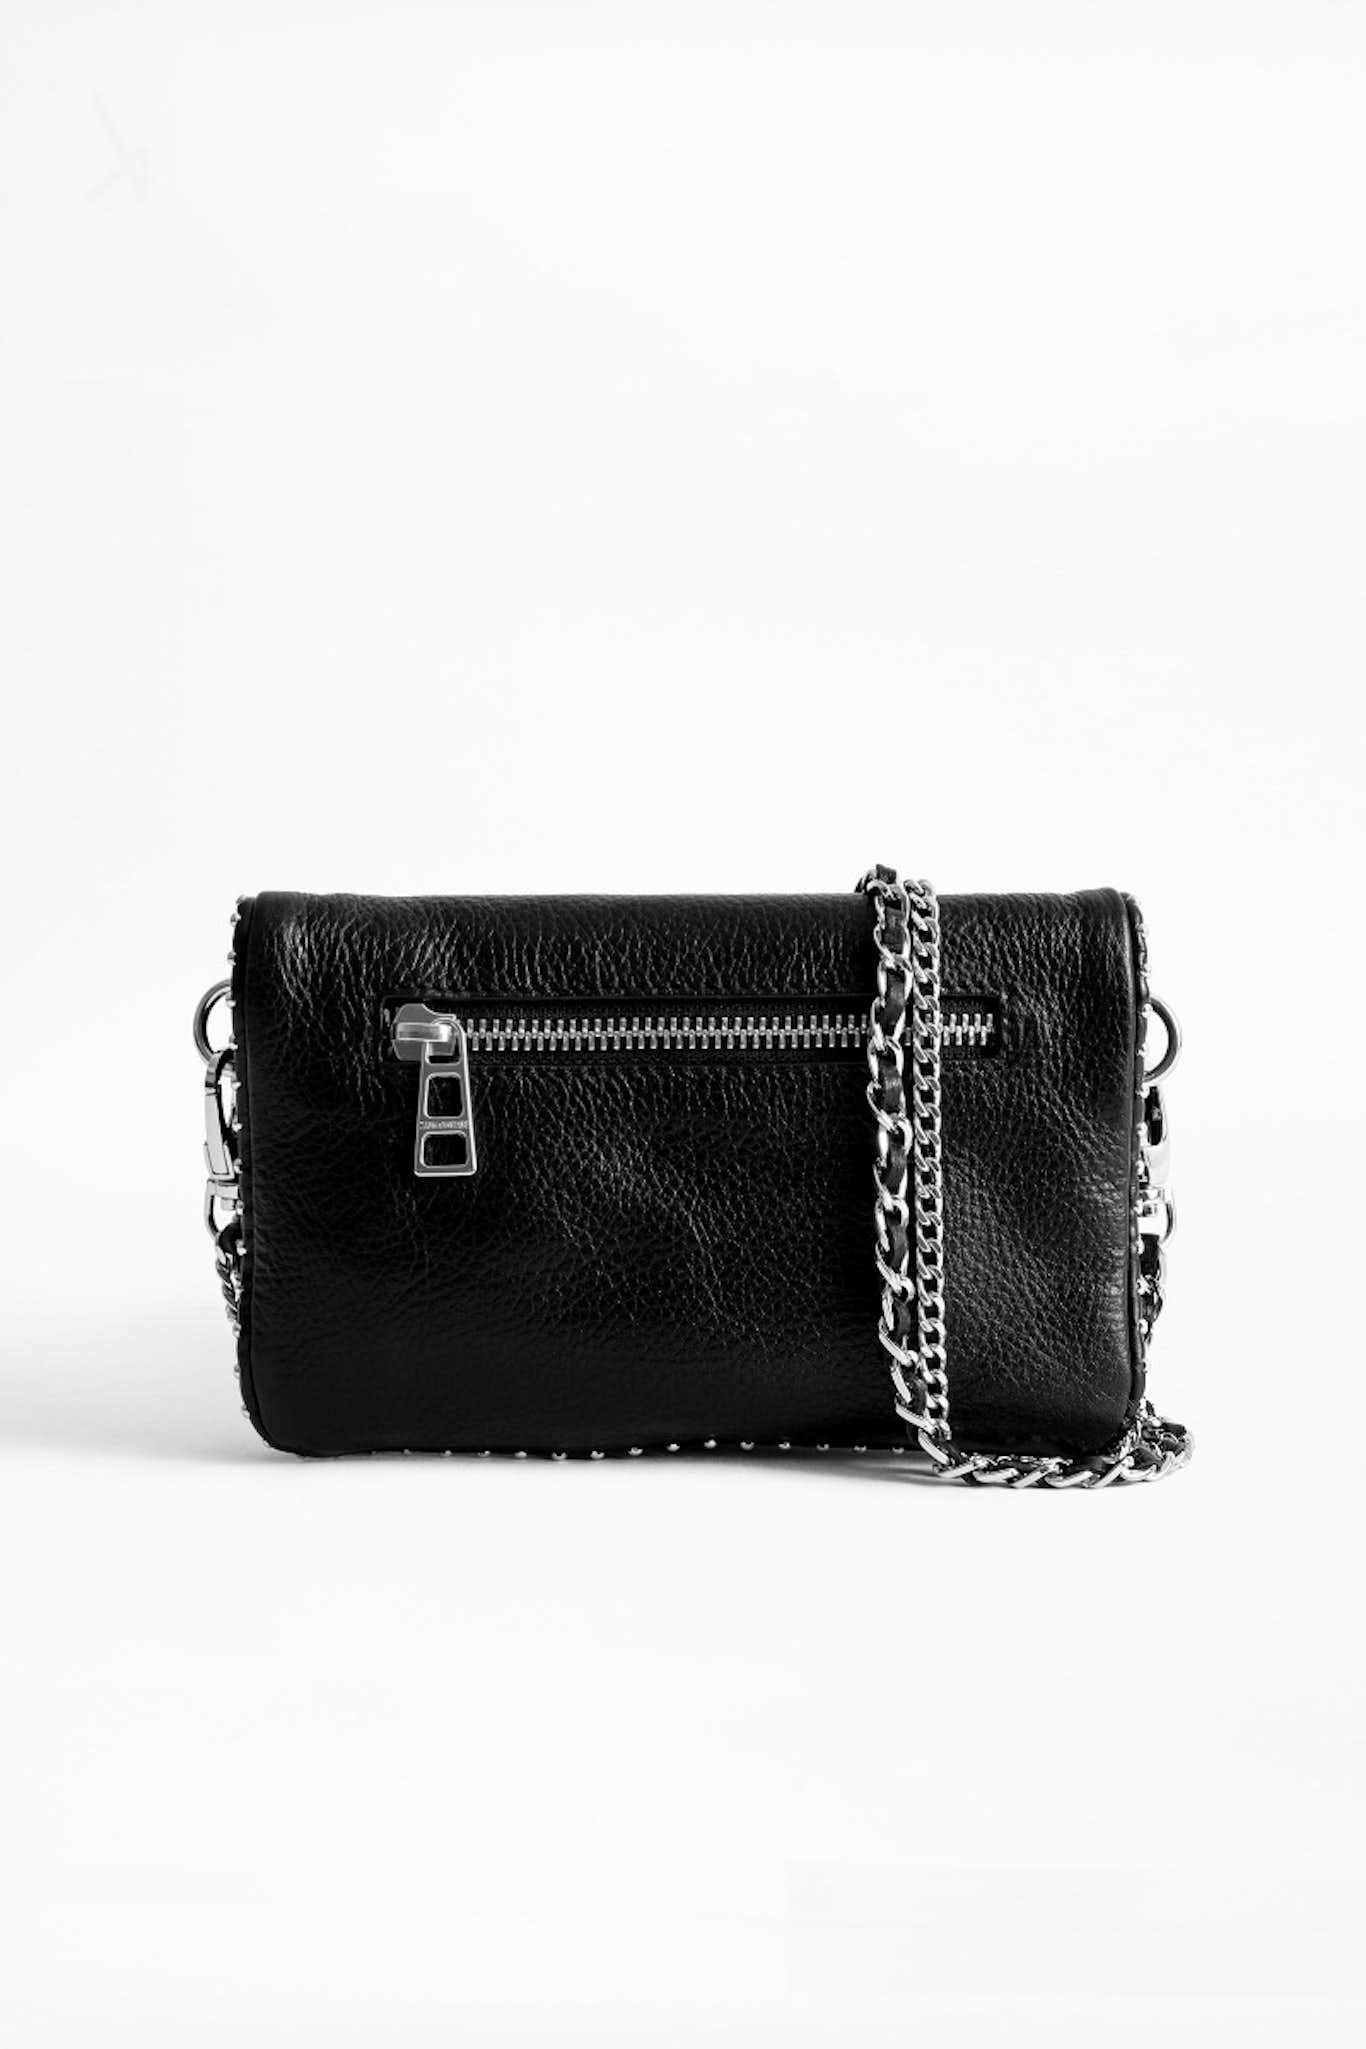 Rock Nano grained leather studs bag, black-silver